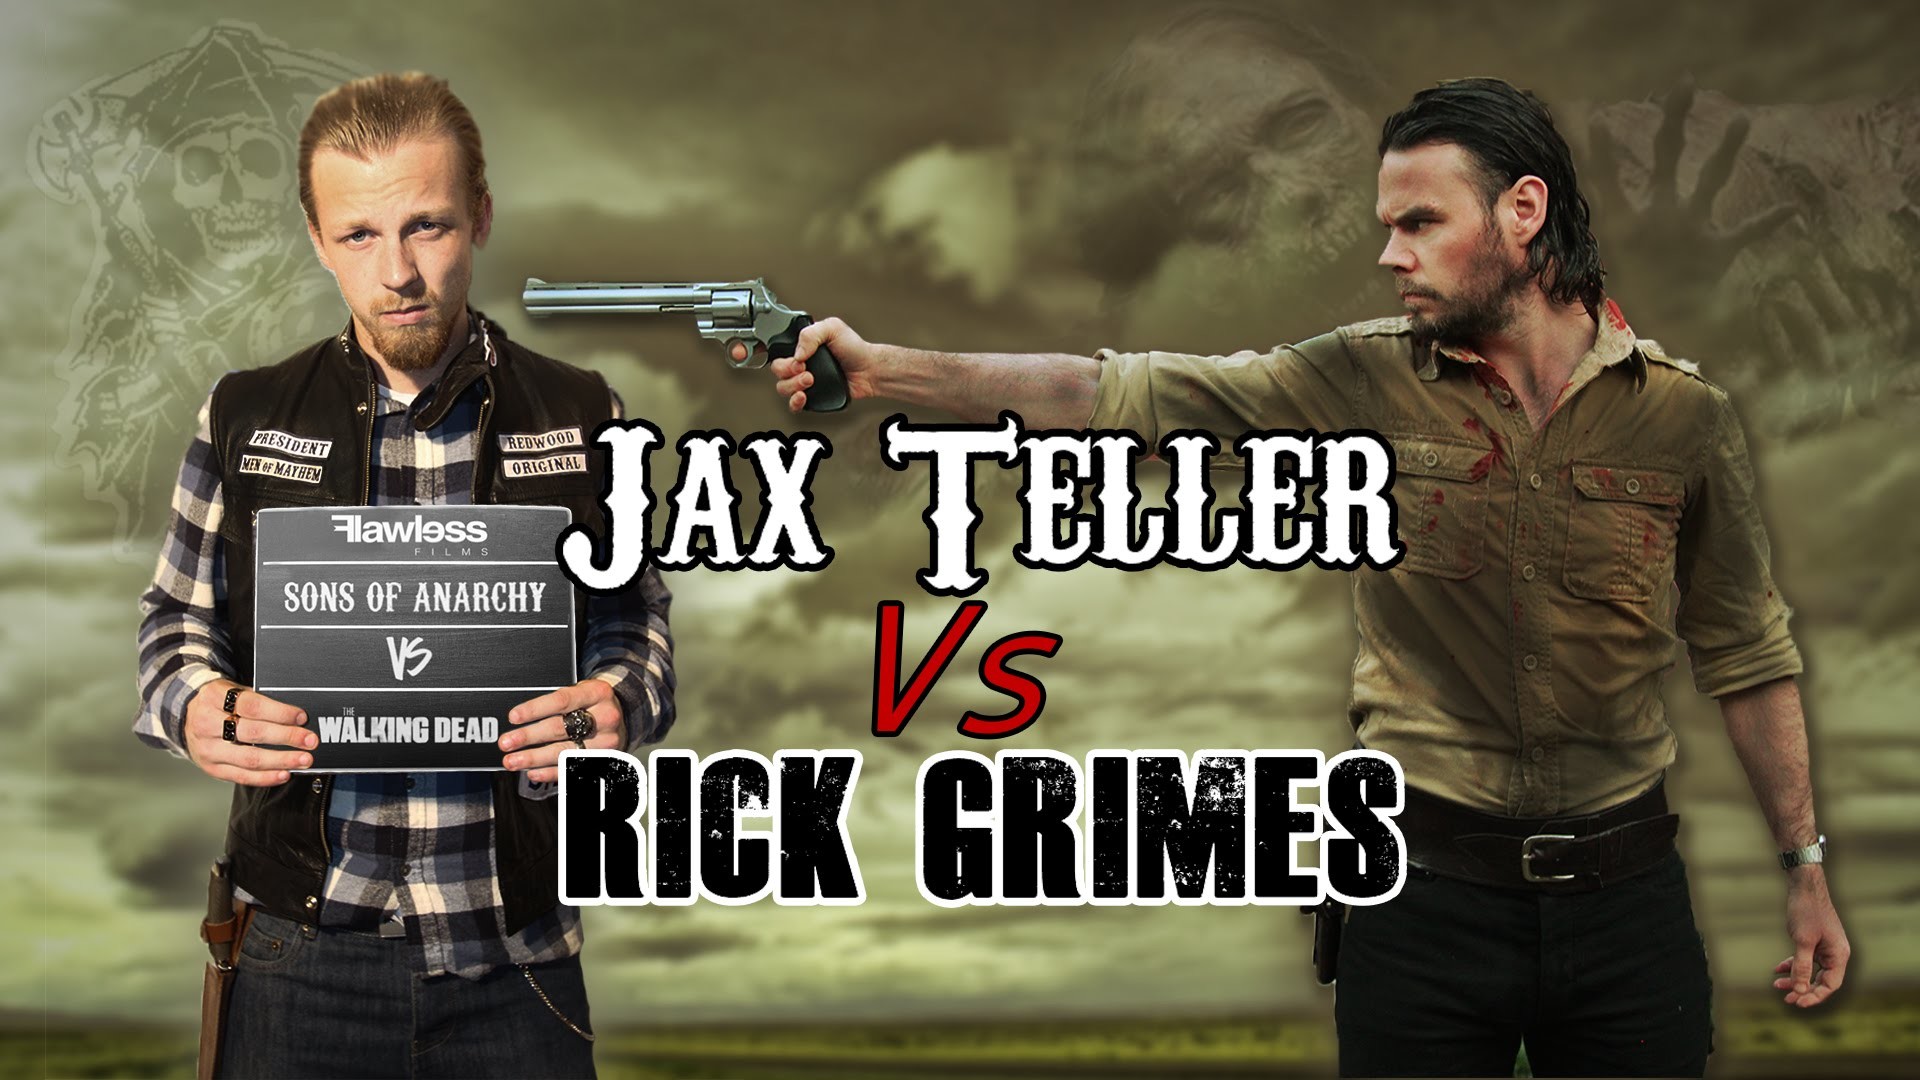 1920x1080 Jax Teller Vs Rick Grimes | Sons of Anarchy Vs The Walking Dead - YouTube